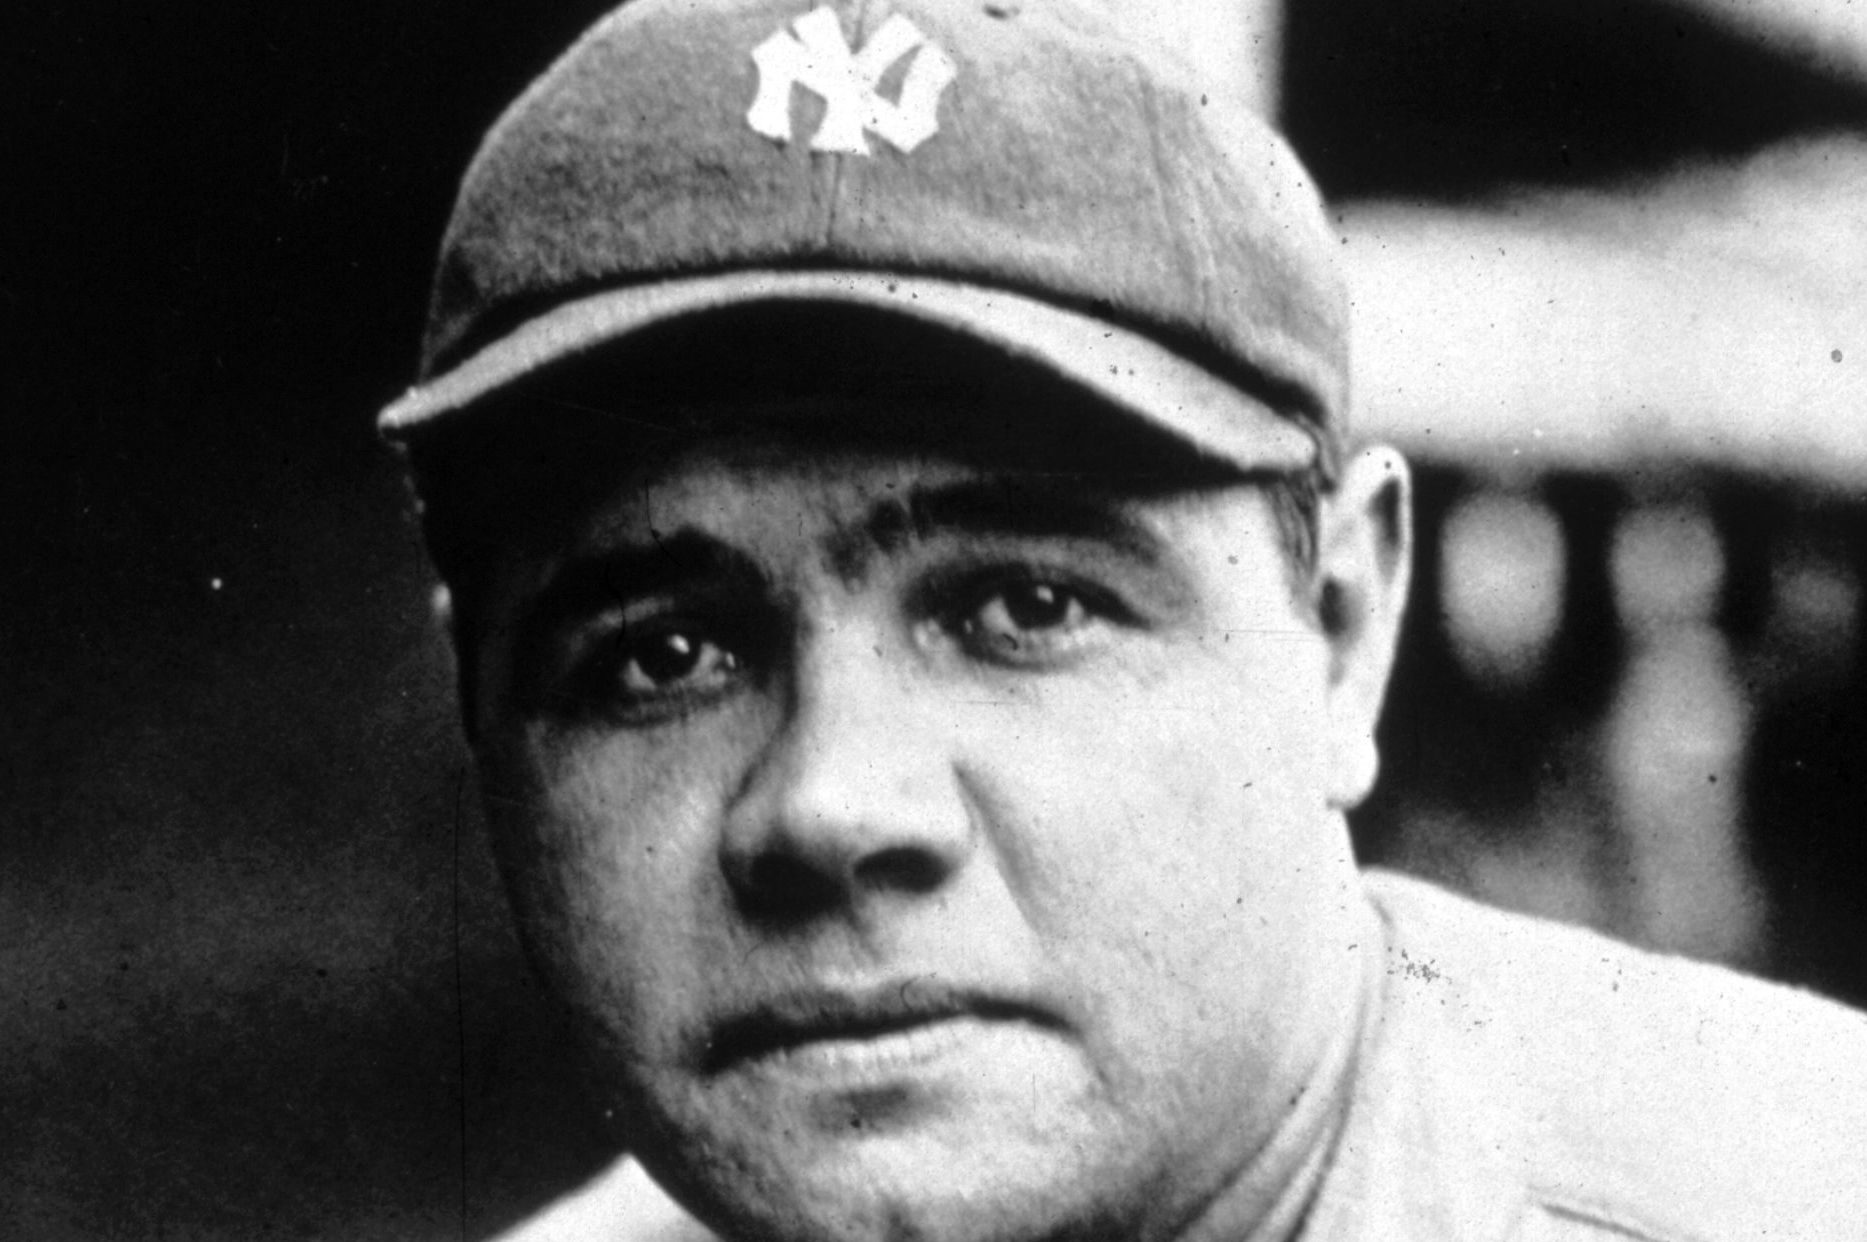 New York Yankees jersey worn by Babe Ruth (George Herman Ruth